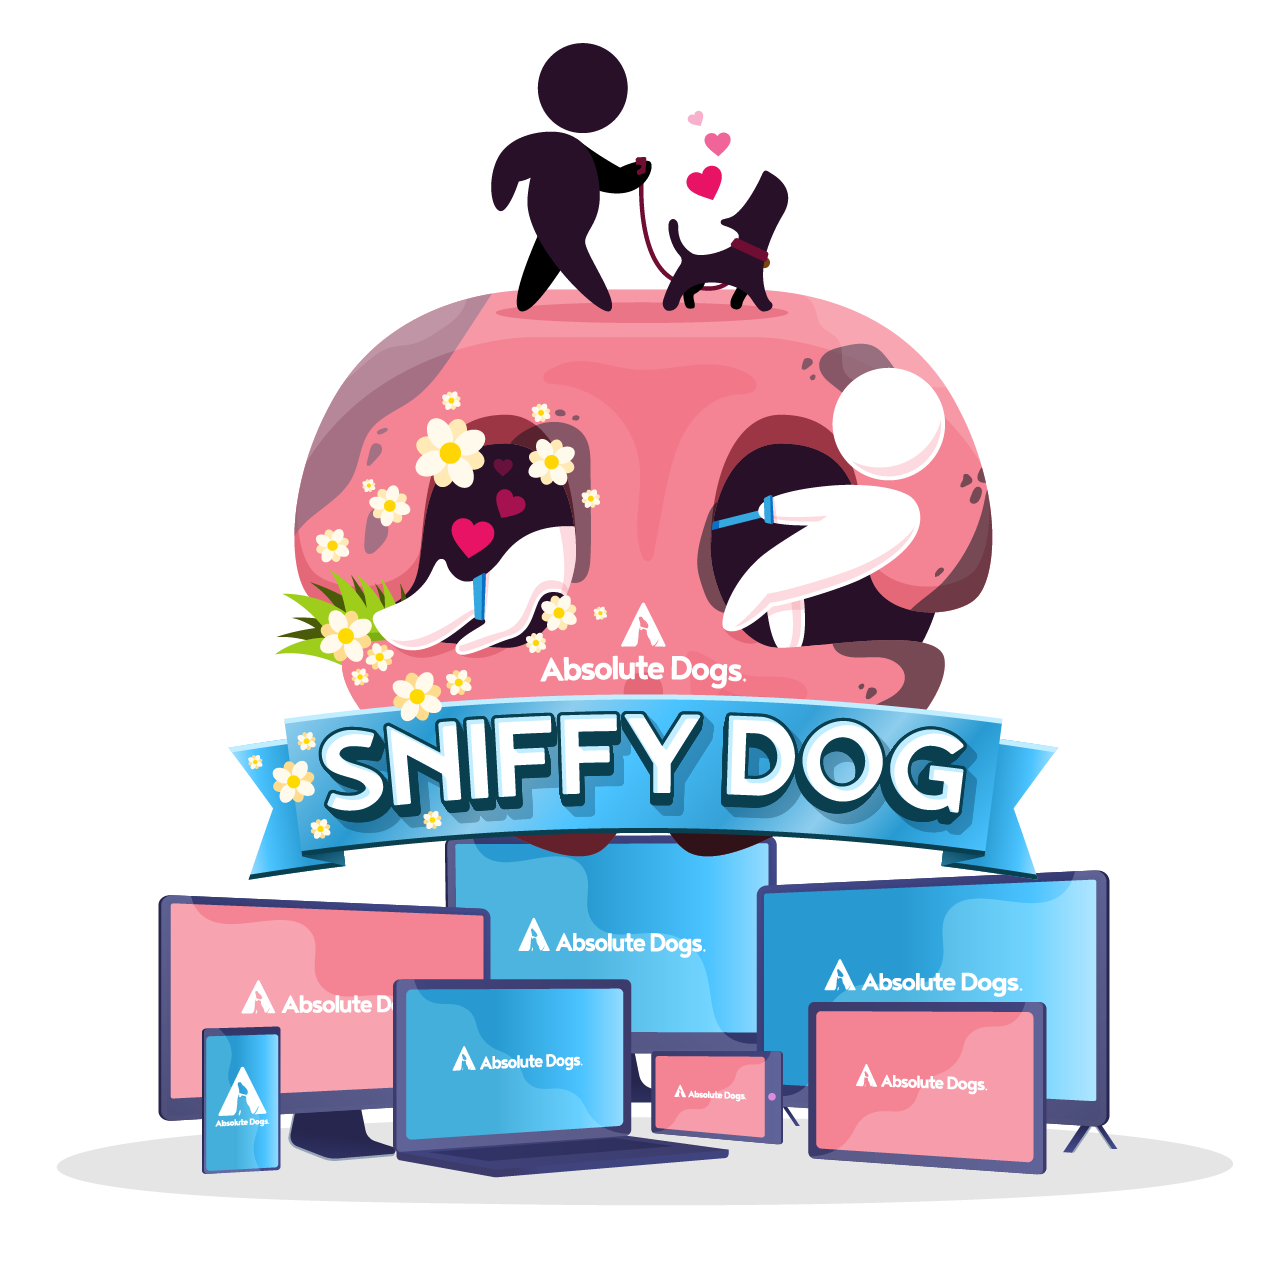 Sniffy Dog